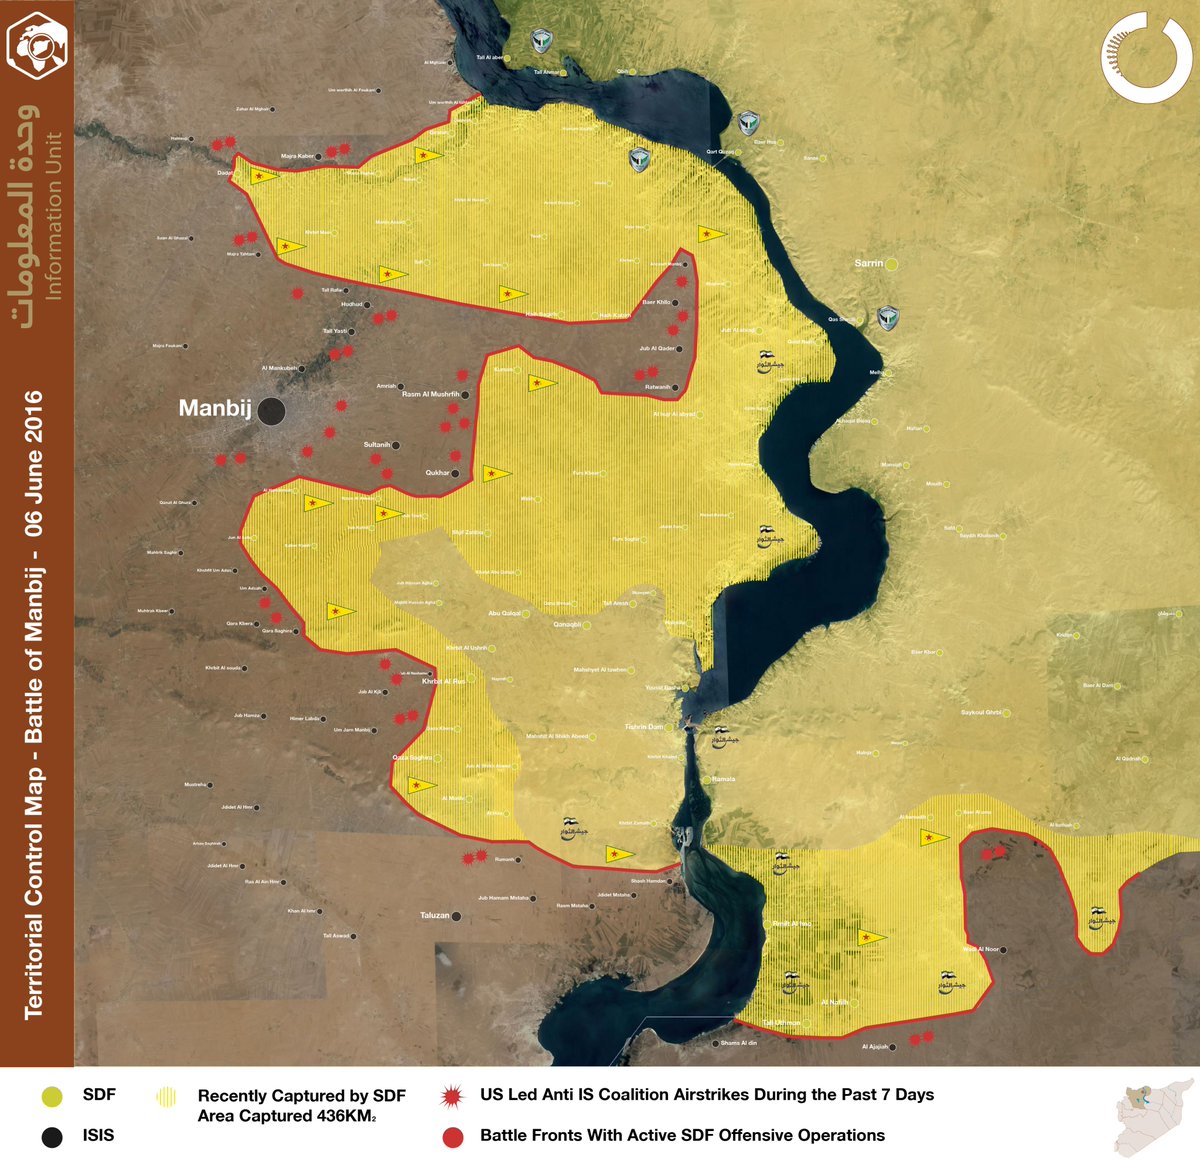 Syria: Battle for Manbij on June 6